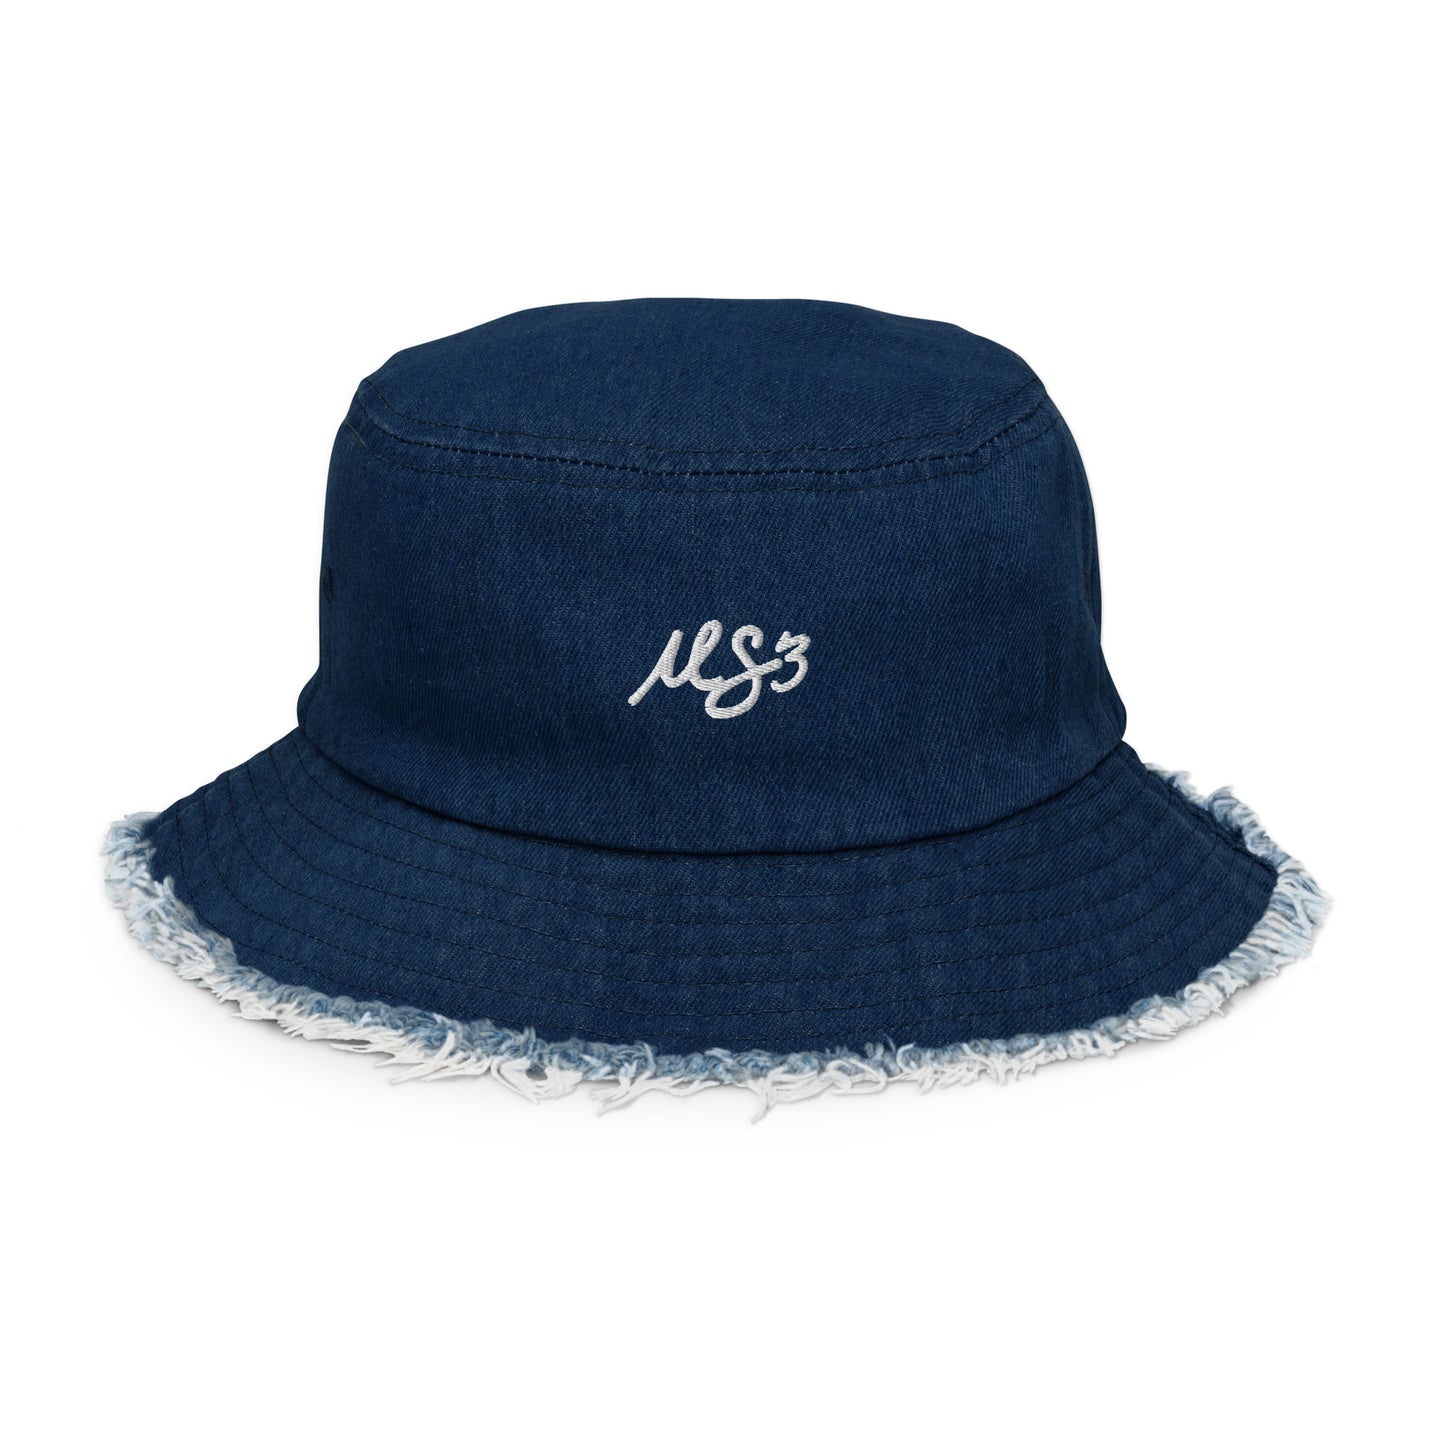 Distressed MS3 Denim Bucket Hat